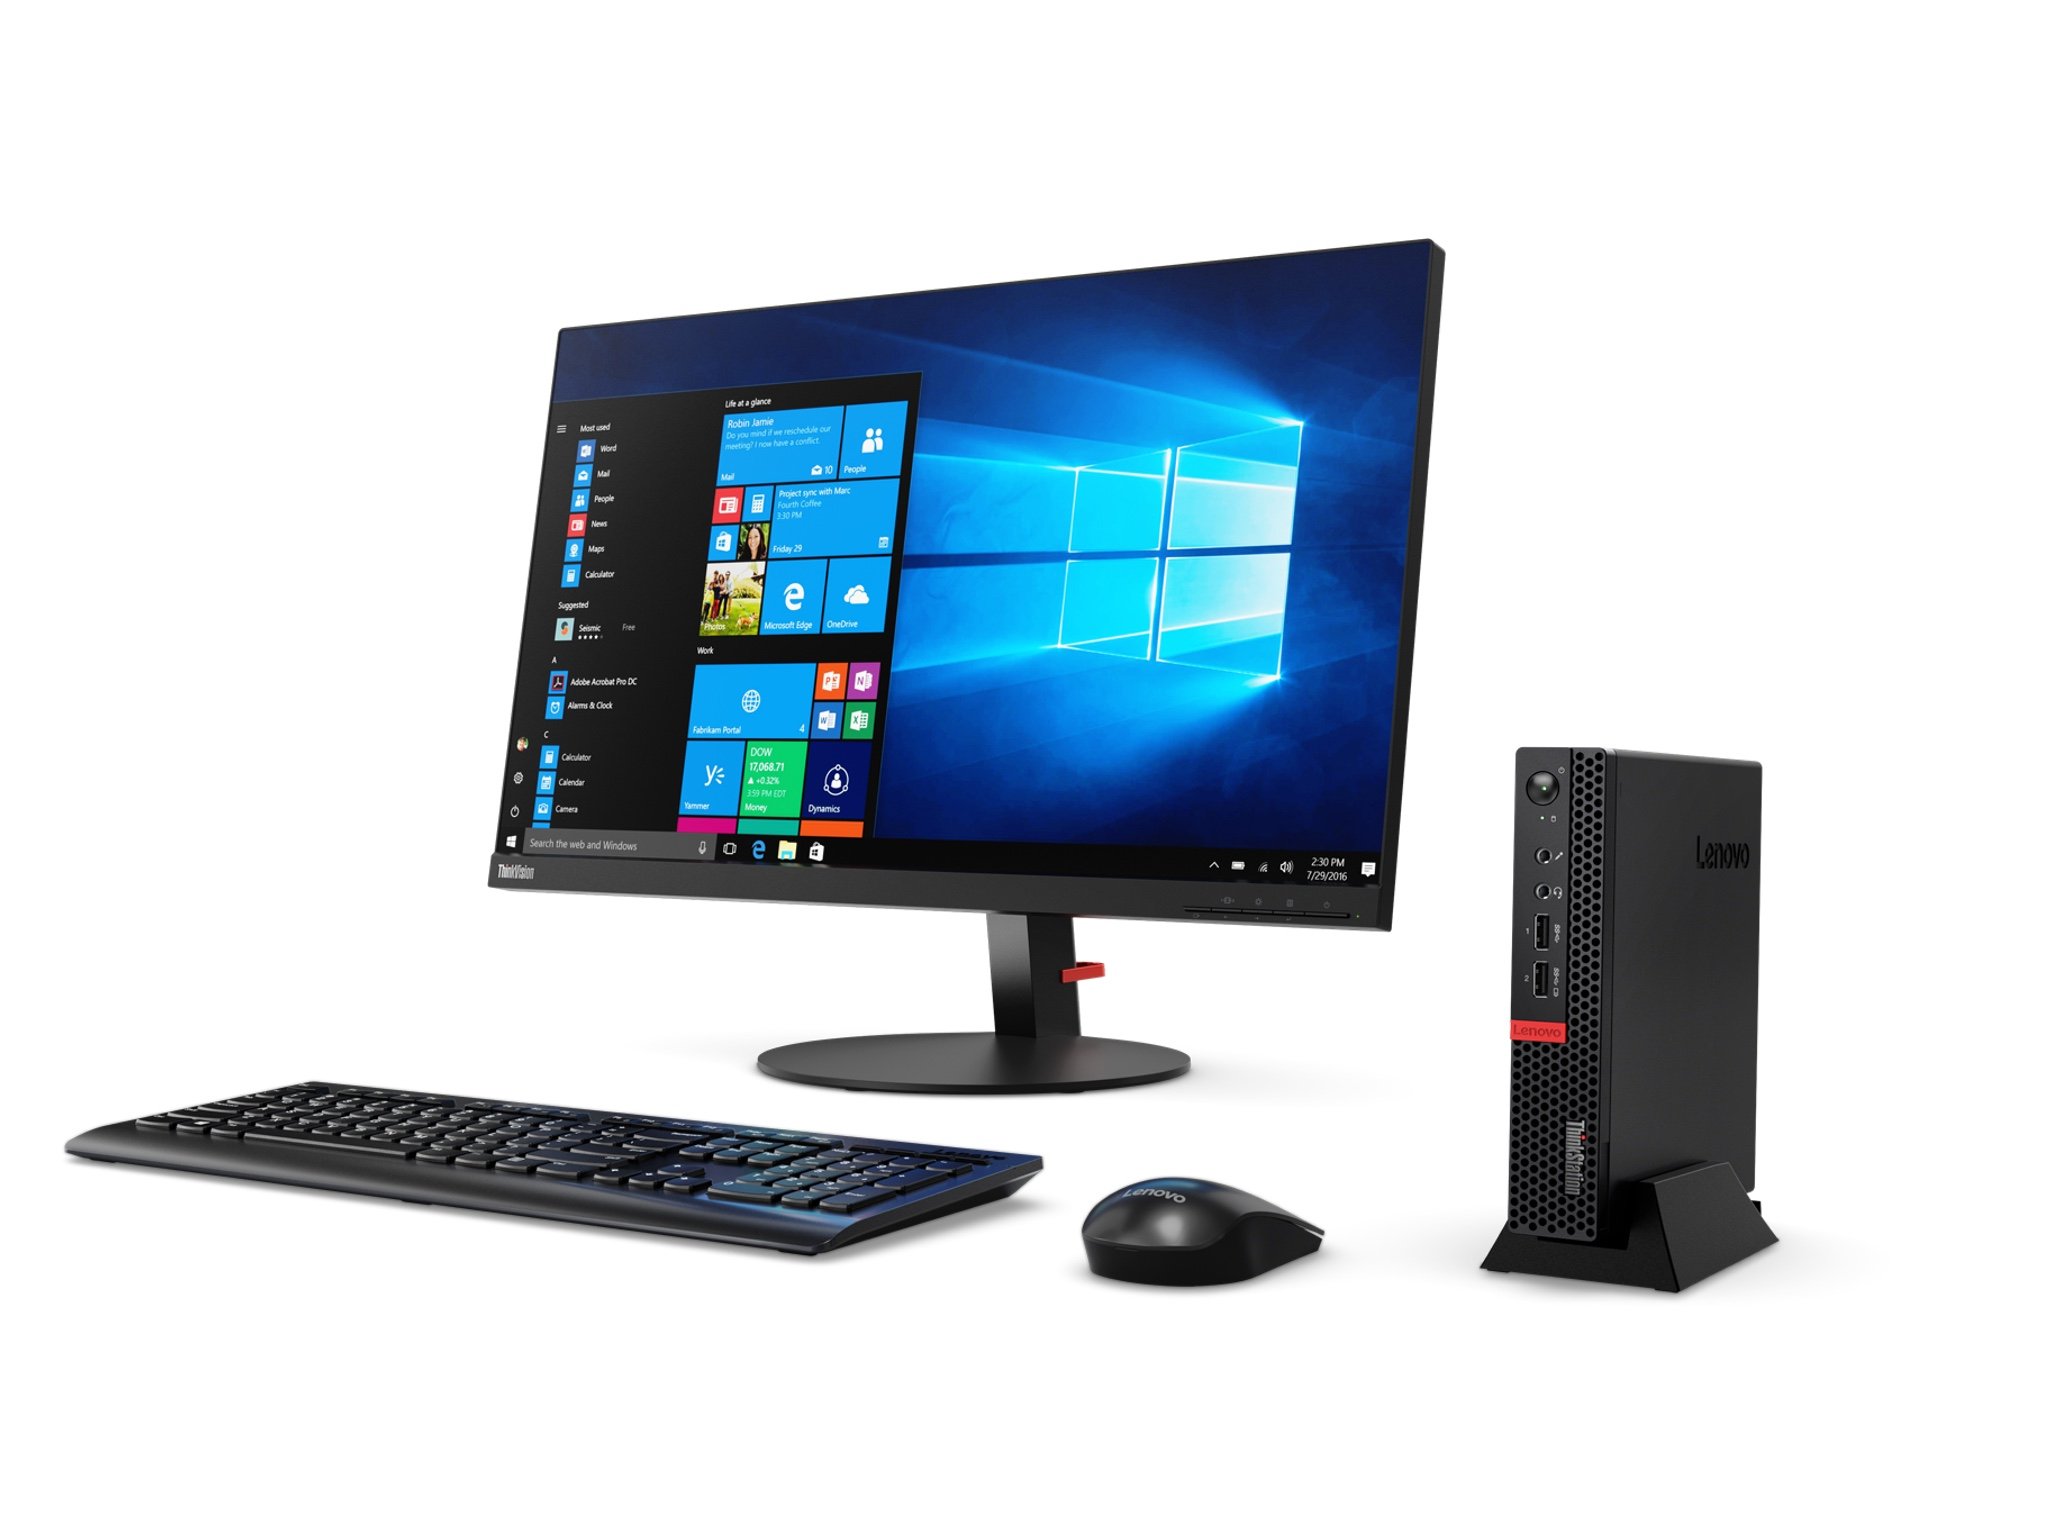 Lenovo announces the diminutive ThinkStation P320 workstation PC